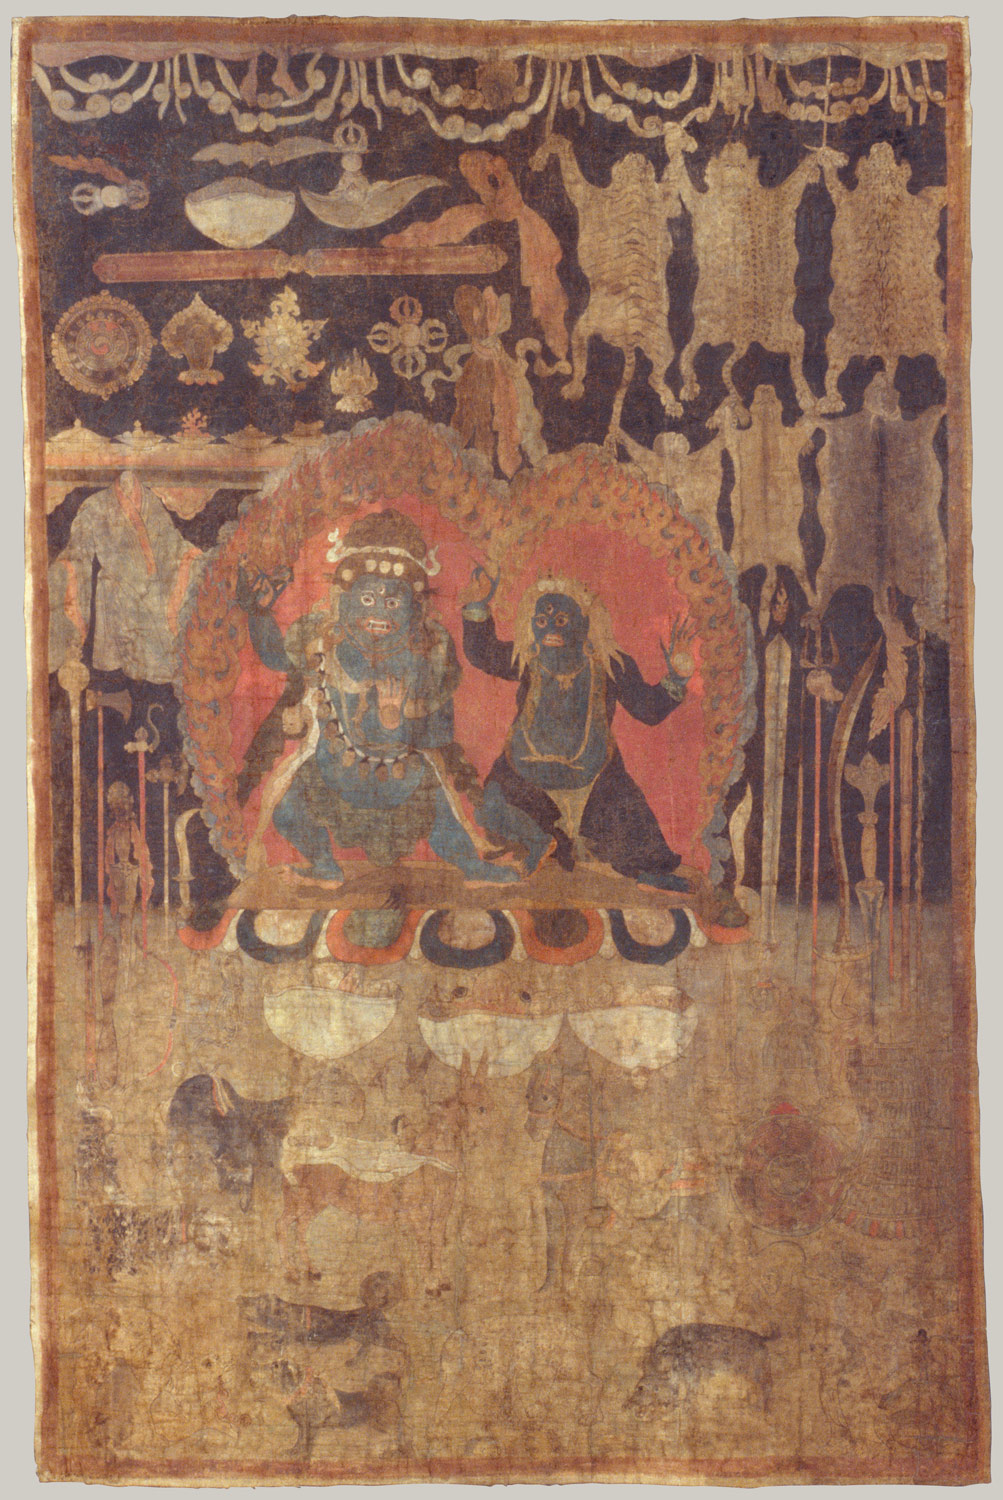 Offerings to the Goddess Palden Lhamo